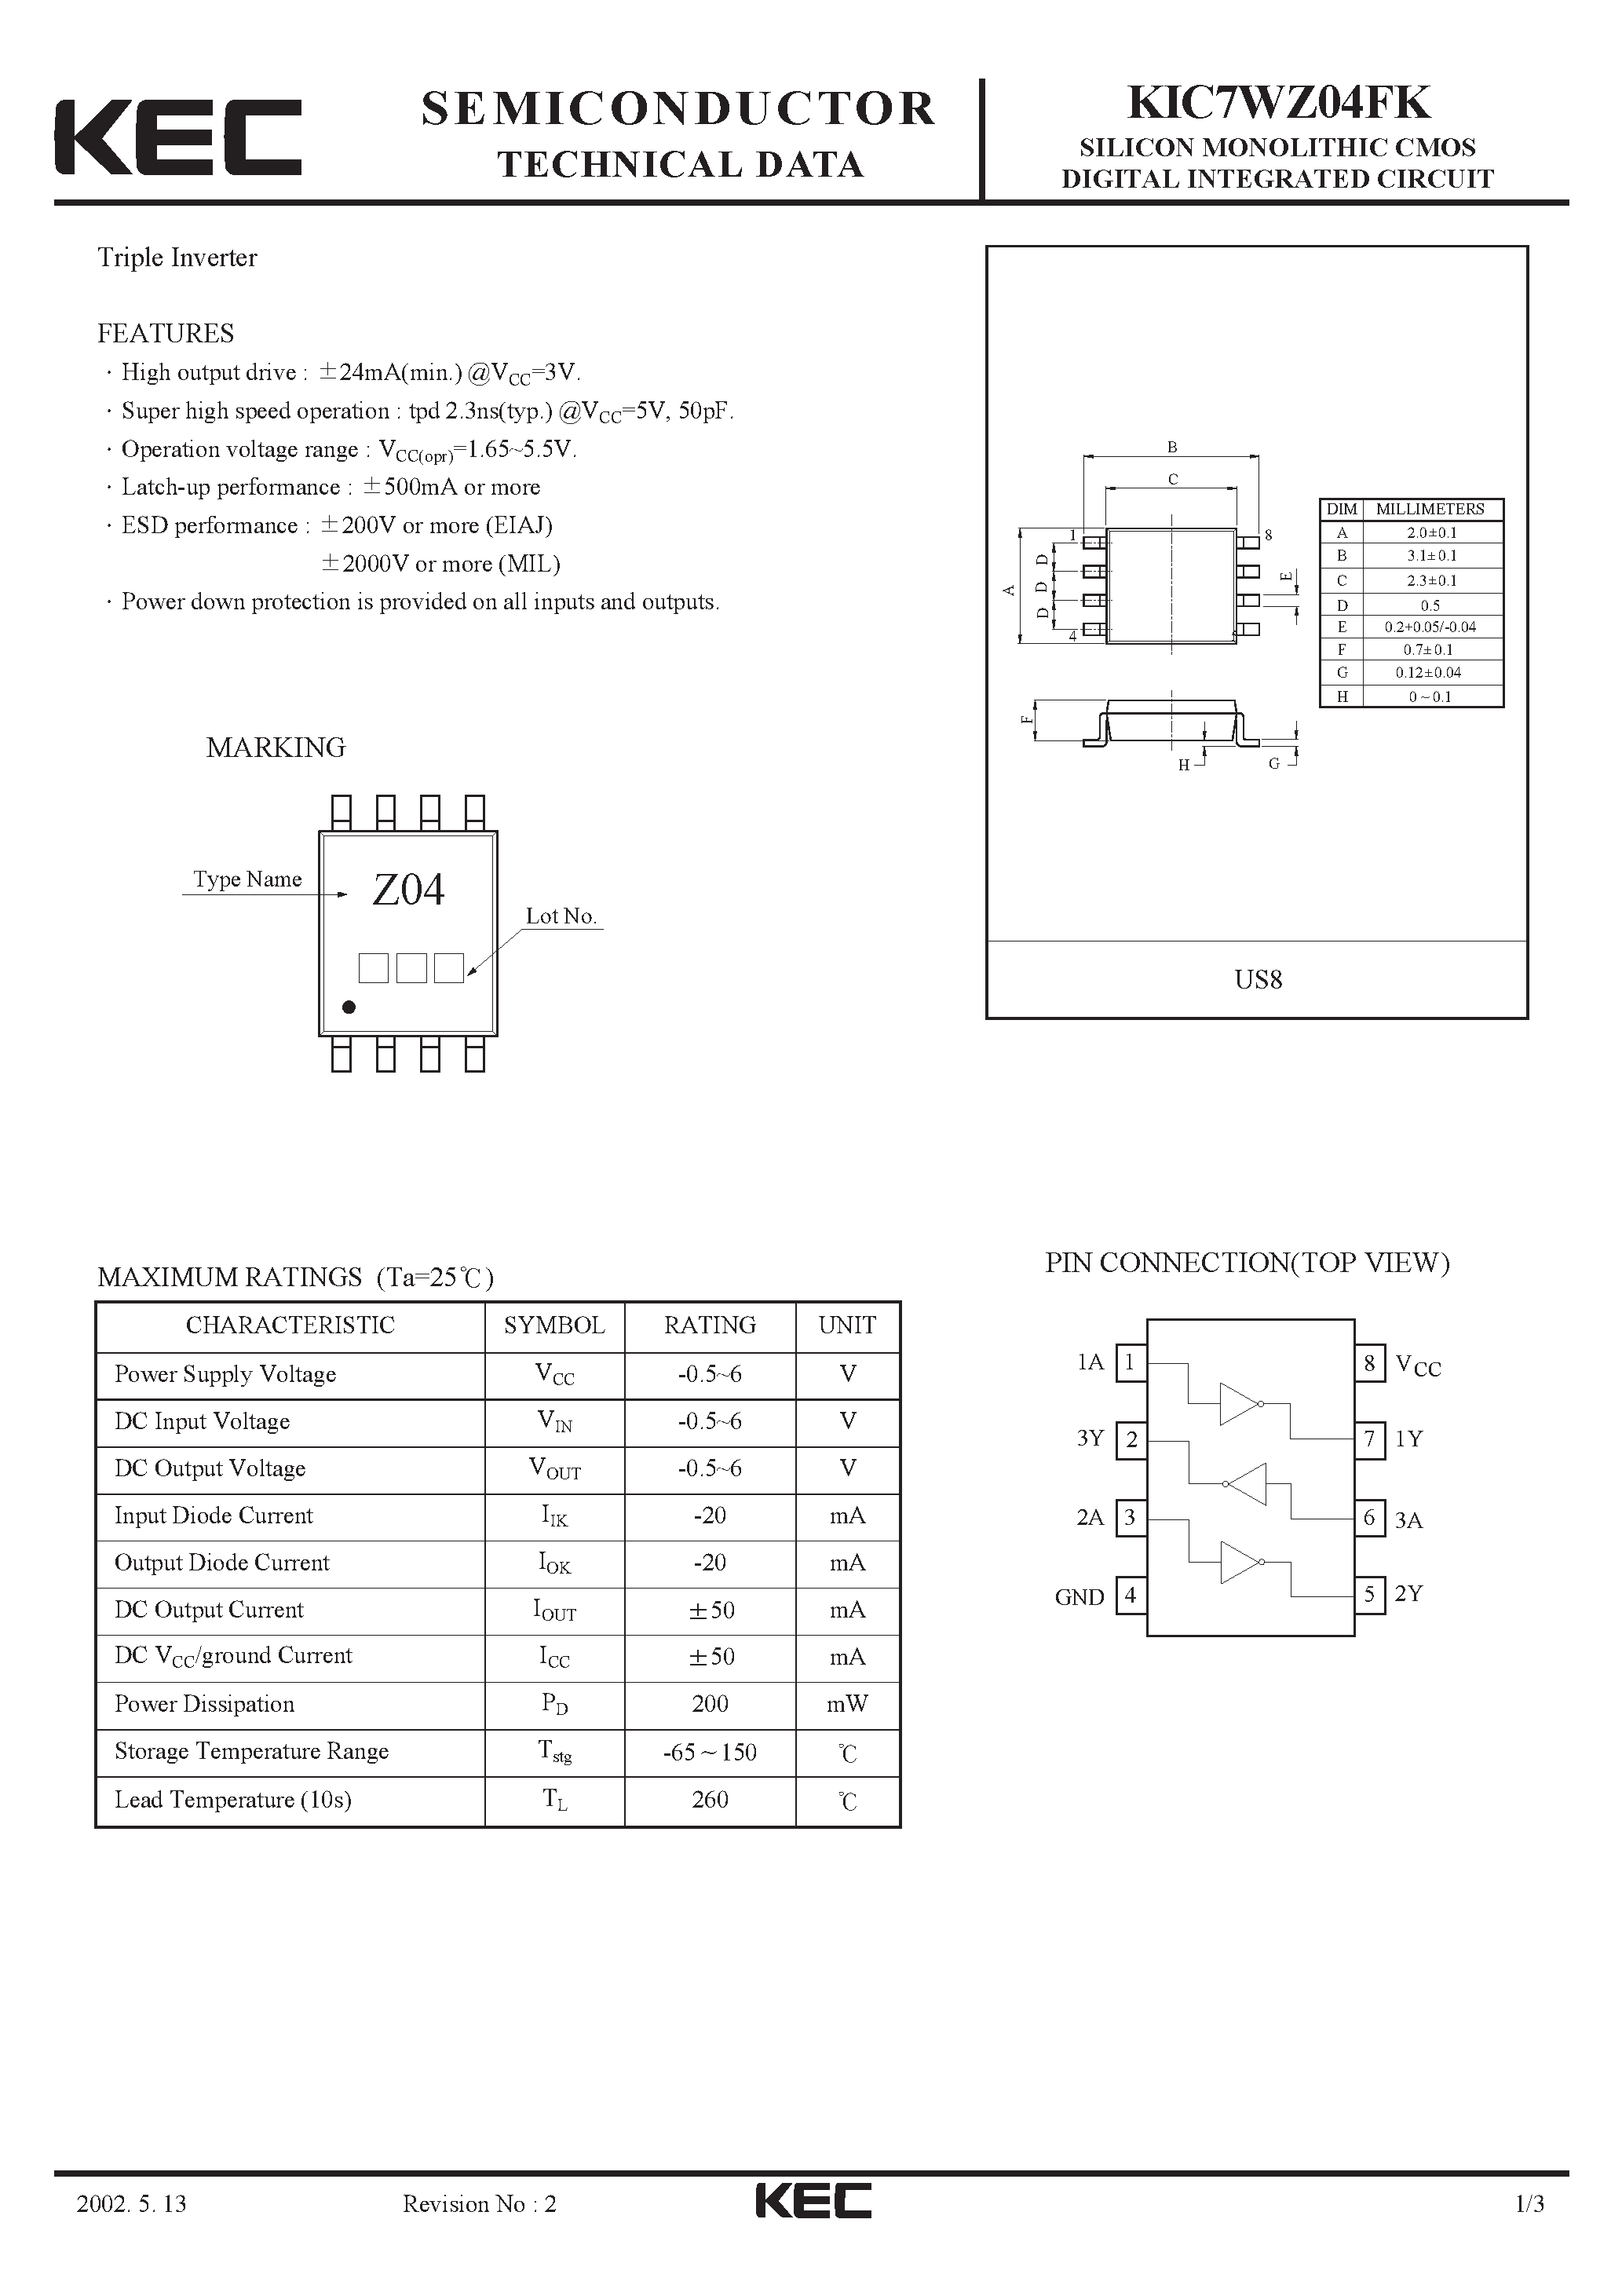 Datasheet KIC7WZ04FK - SILICON MONOLITHIC CMOS DIGITAL INTEGRATED CIRCUIT(TRIPLE INVERTER) page 1